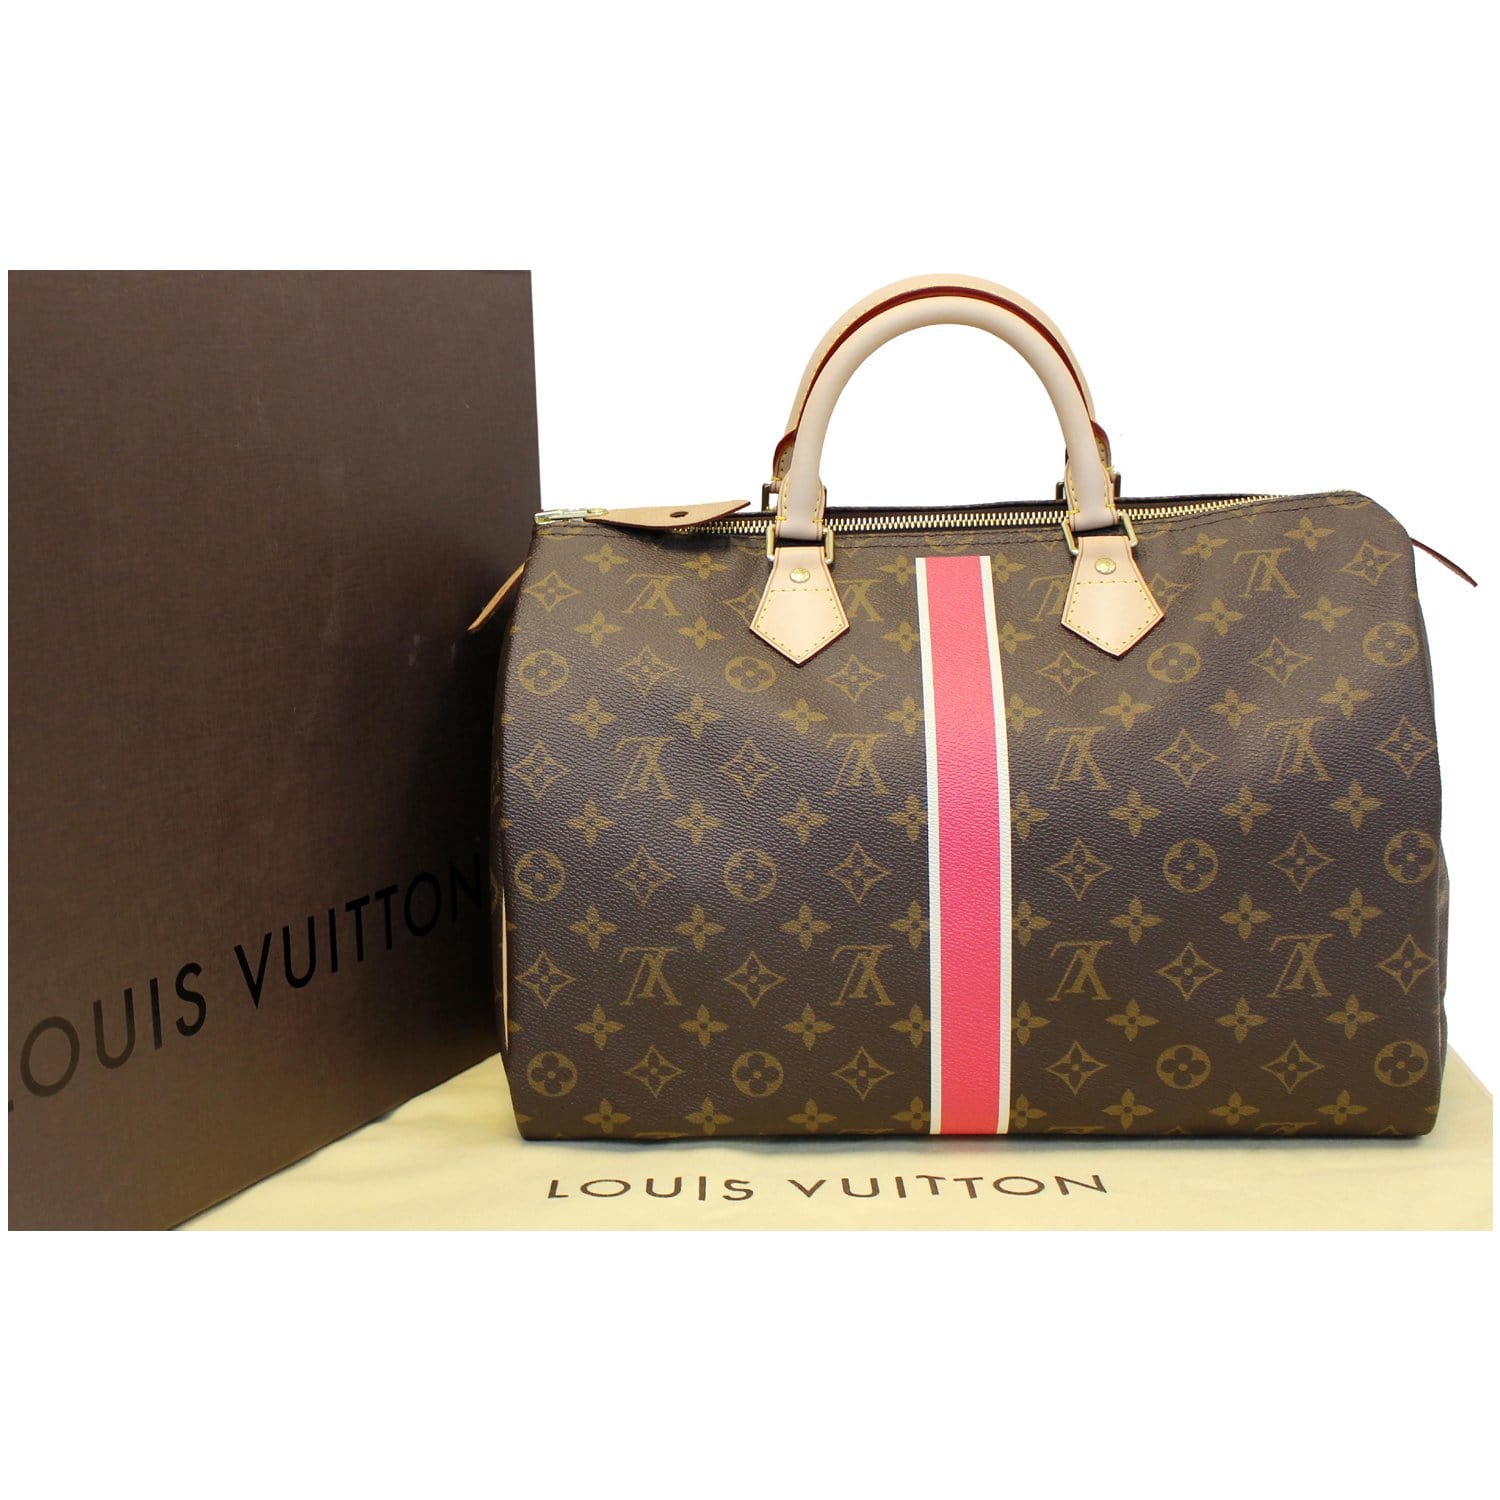 My new purchase - Louis Vuitton Speedy 35 Mon Monogram 